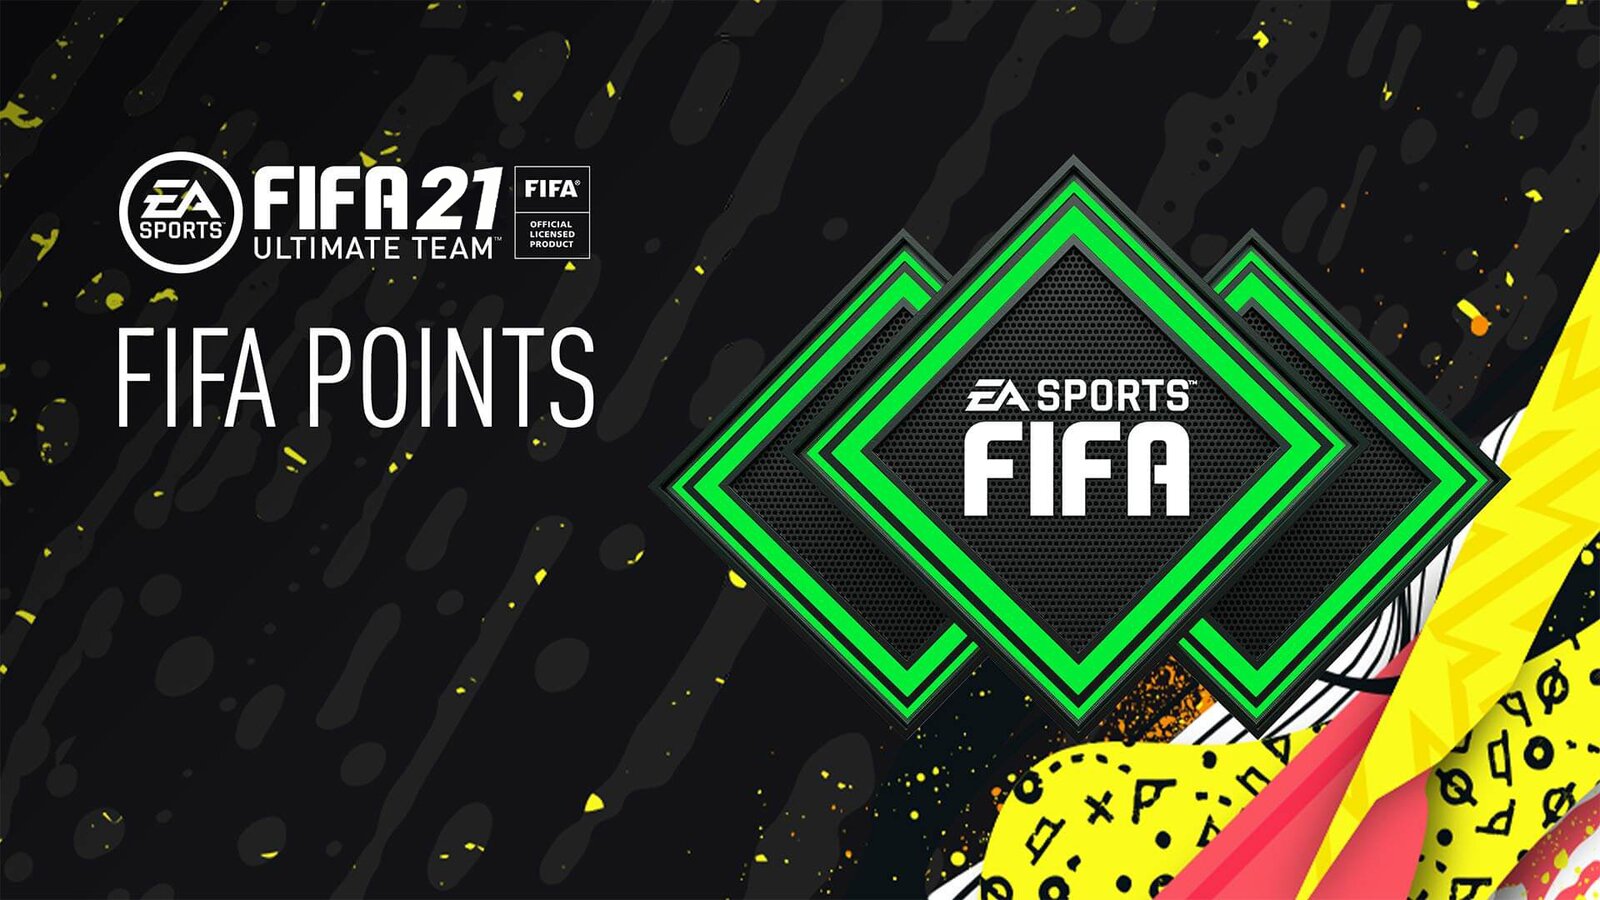 FIFA 21 Ultimate Team - FIFA Points